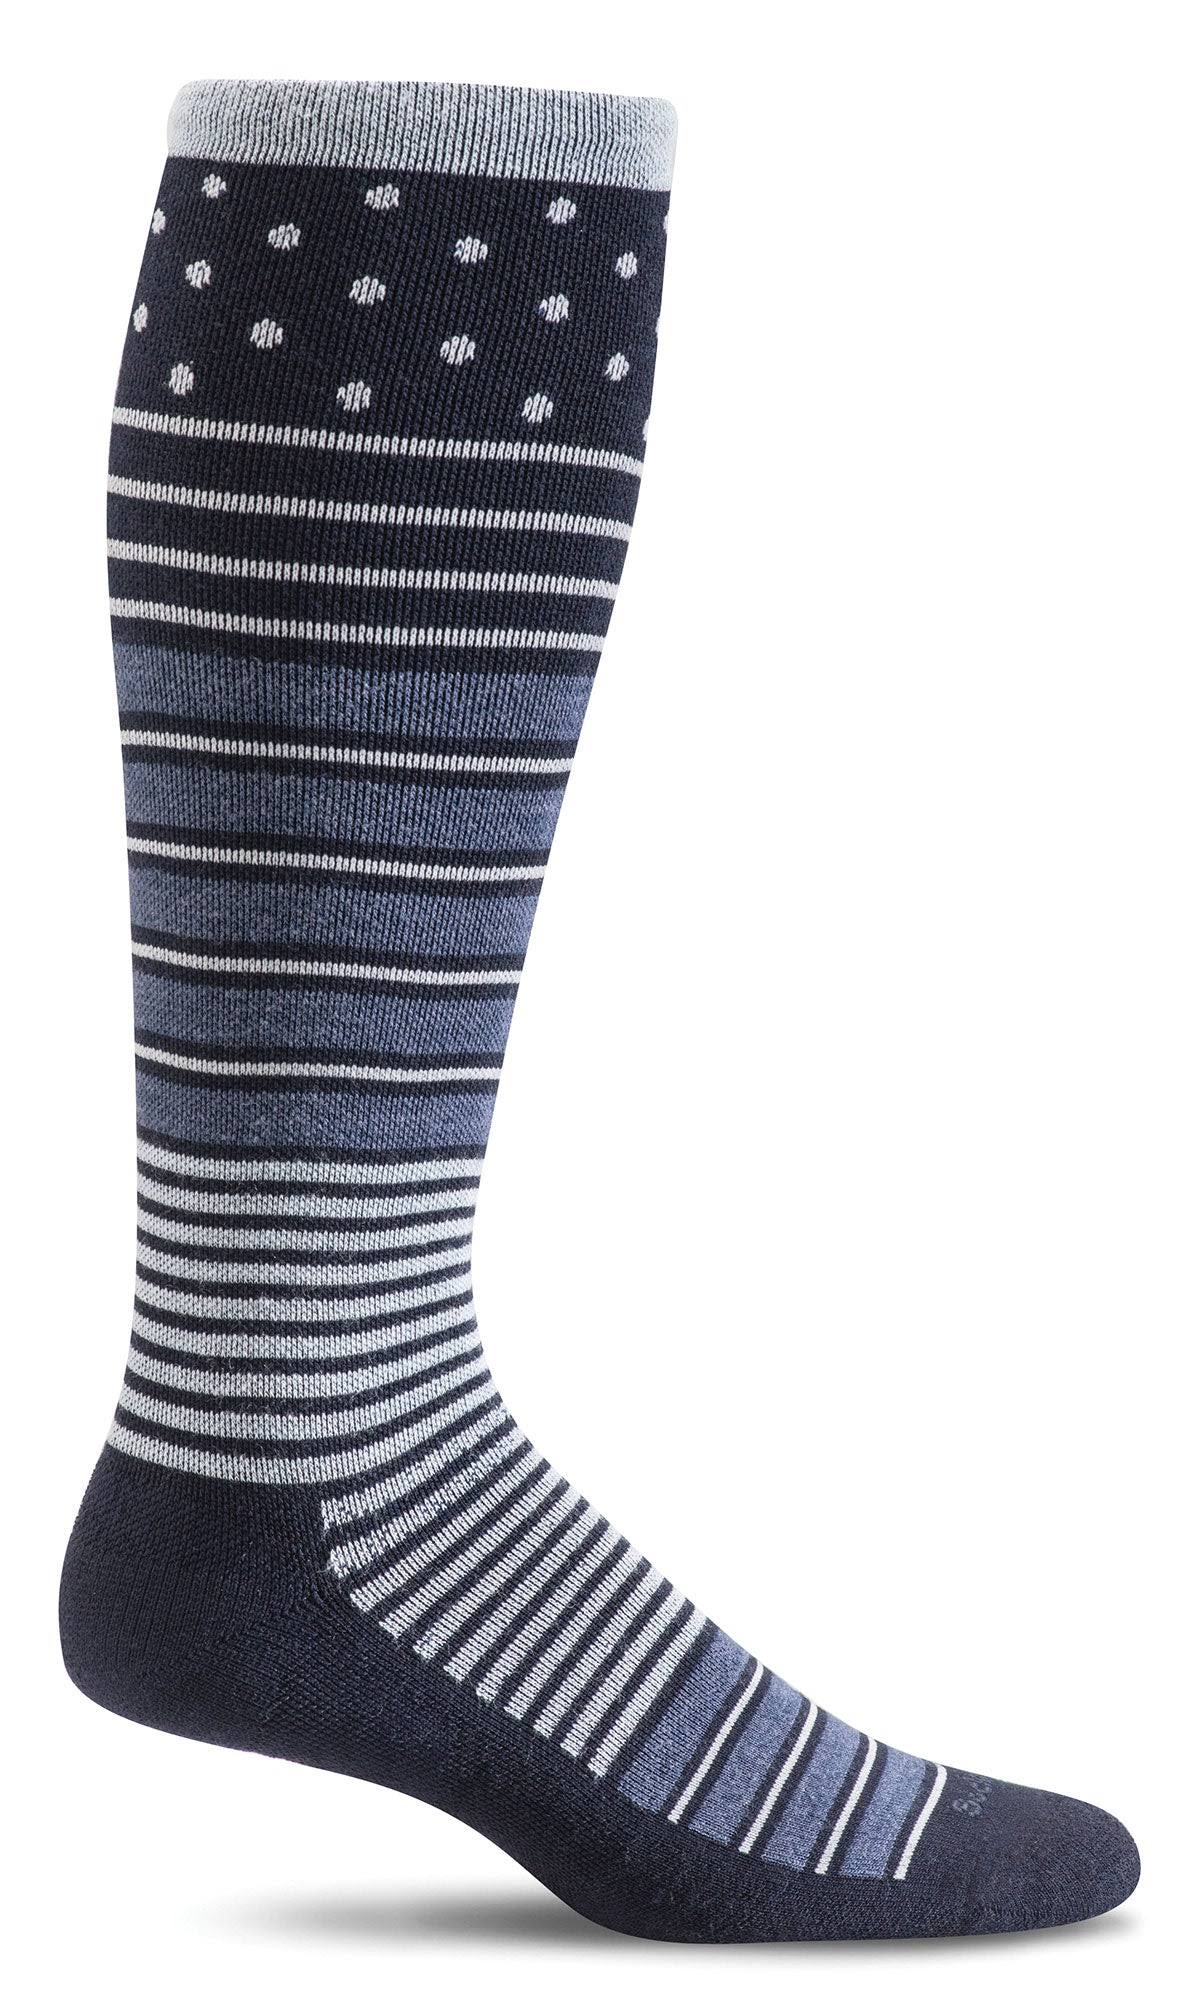 Sockwell Women's Twister Graduated Compression Socks - Navy, Medium